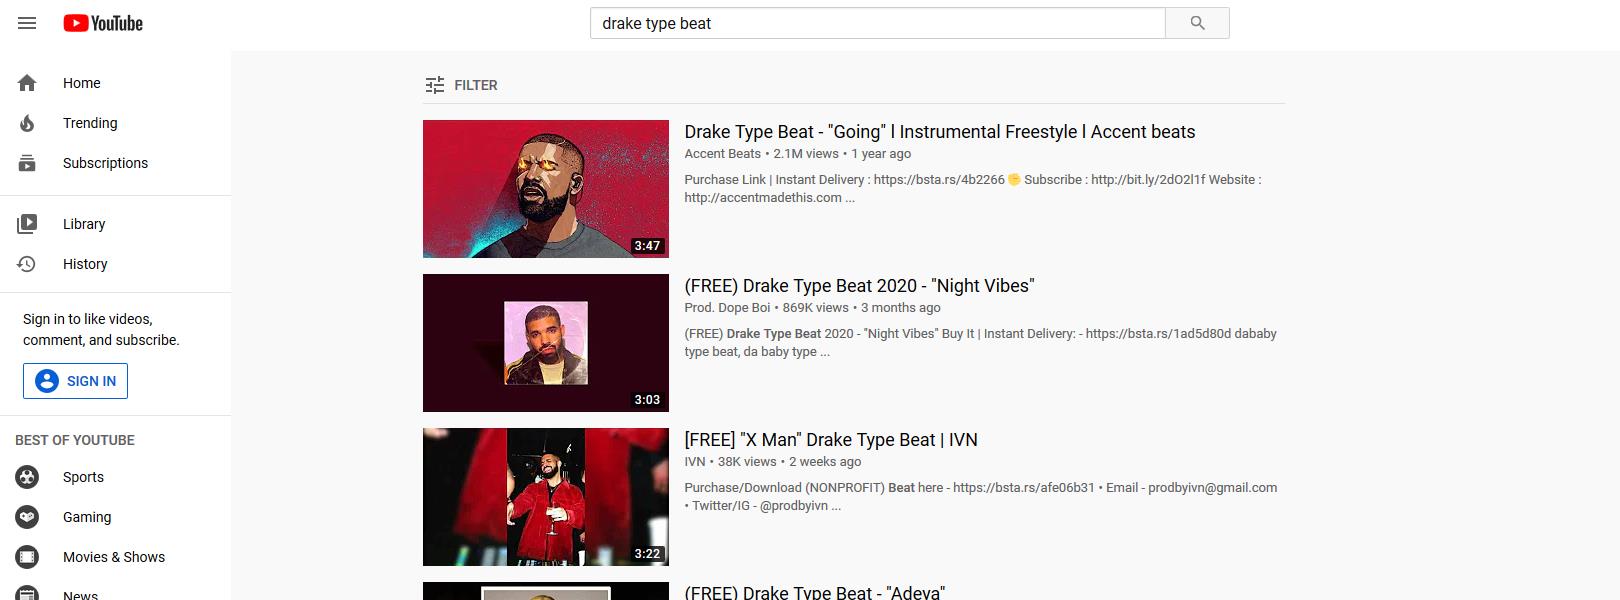 drake type beats on youtube